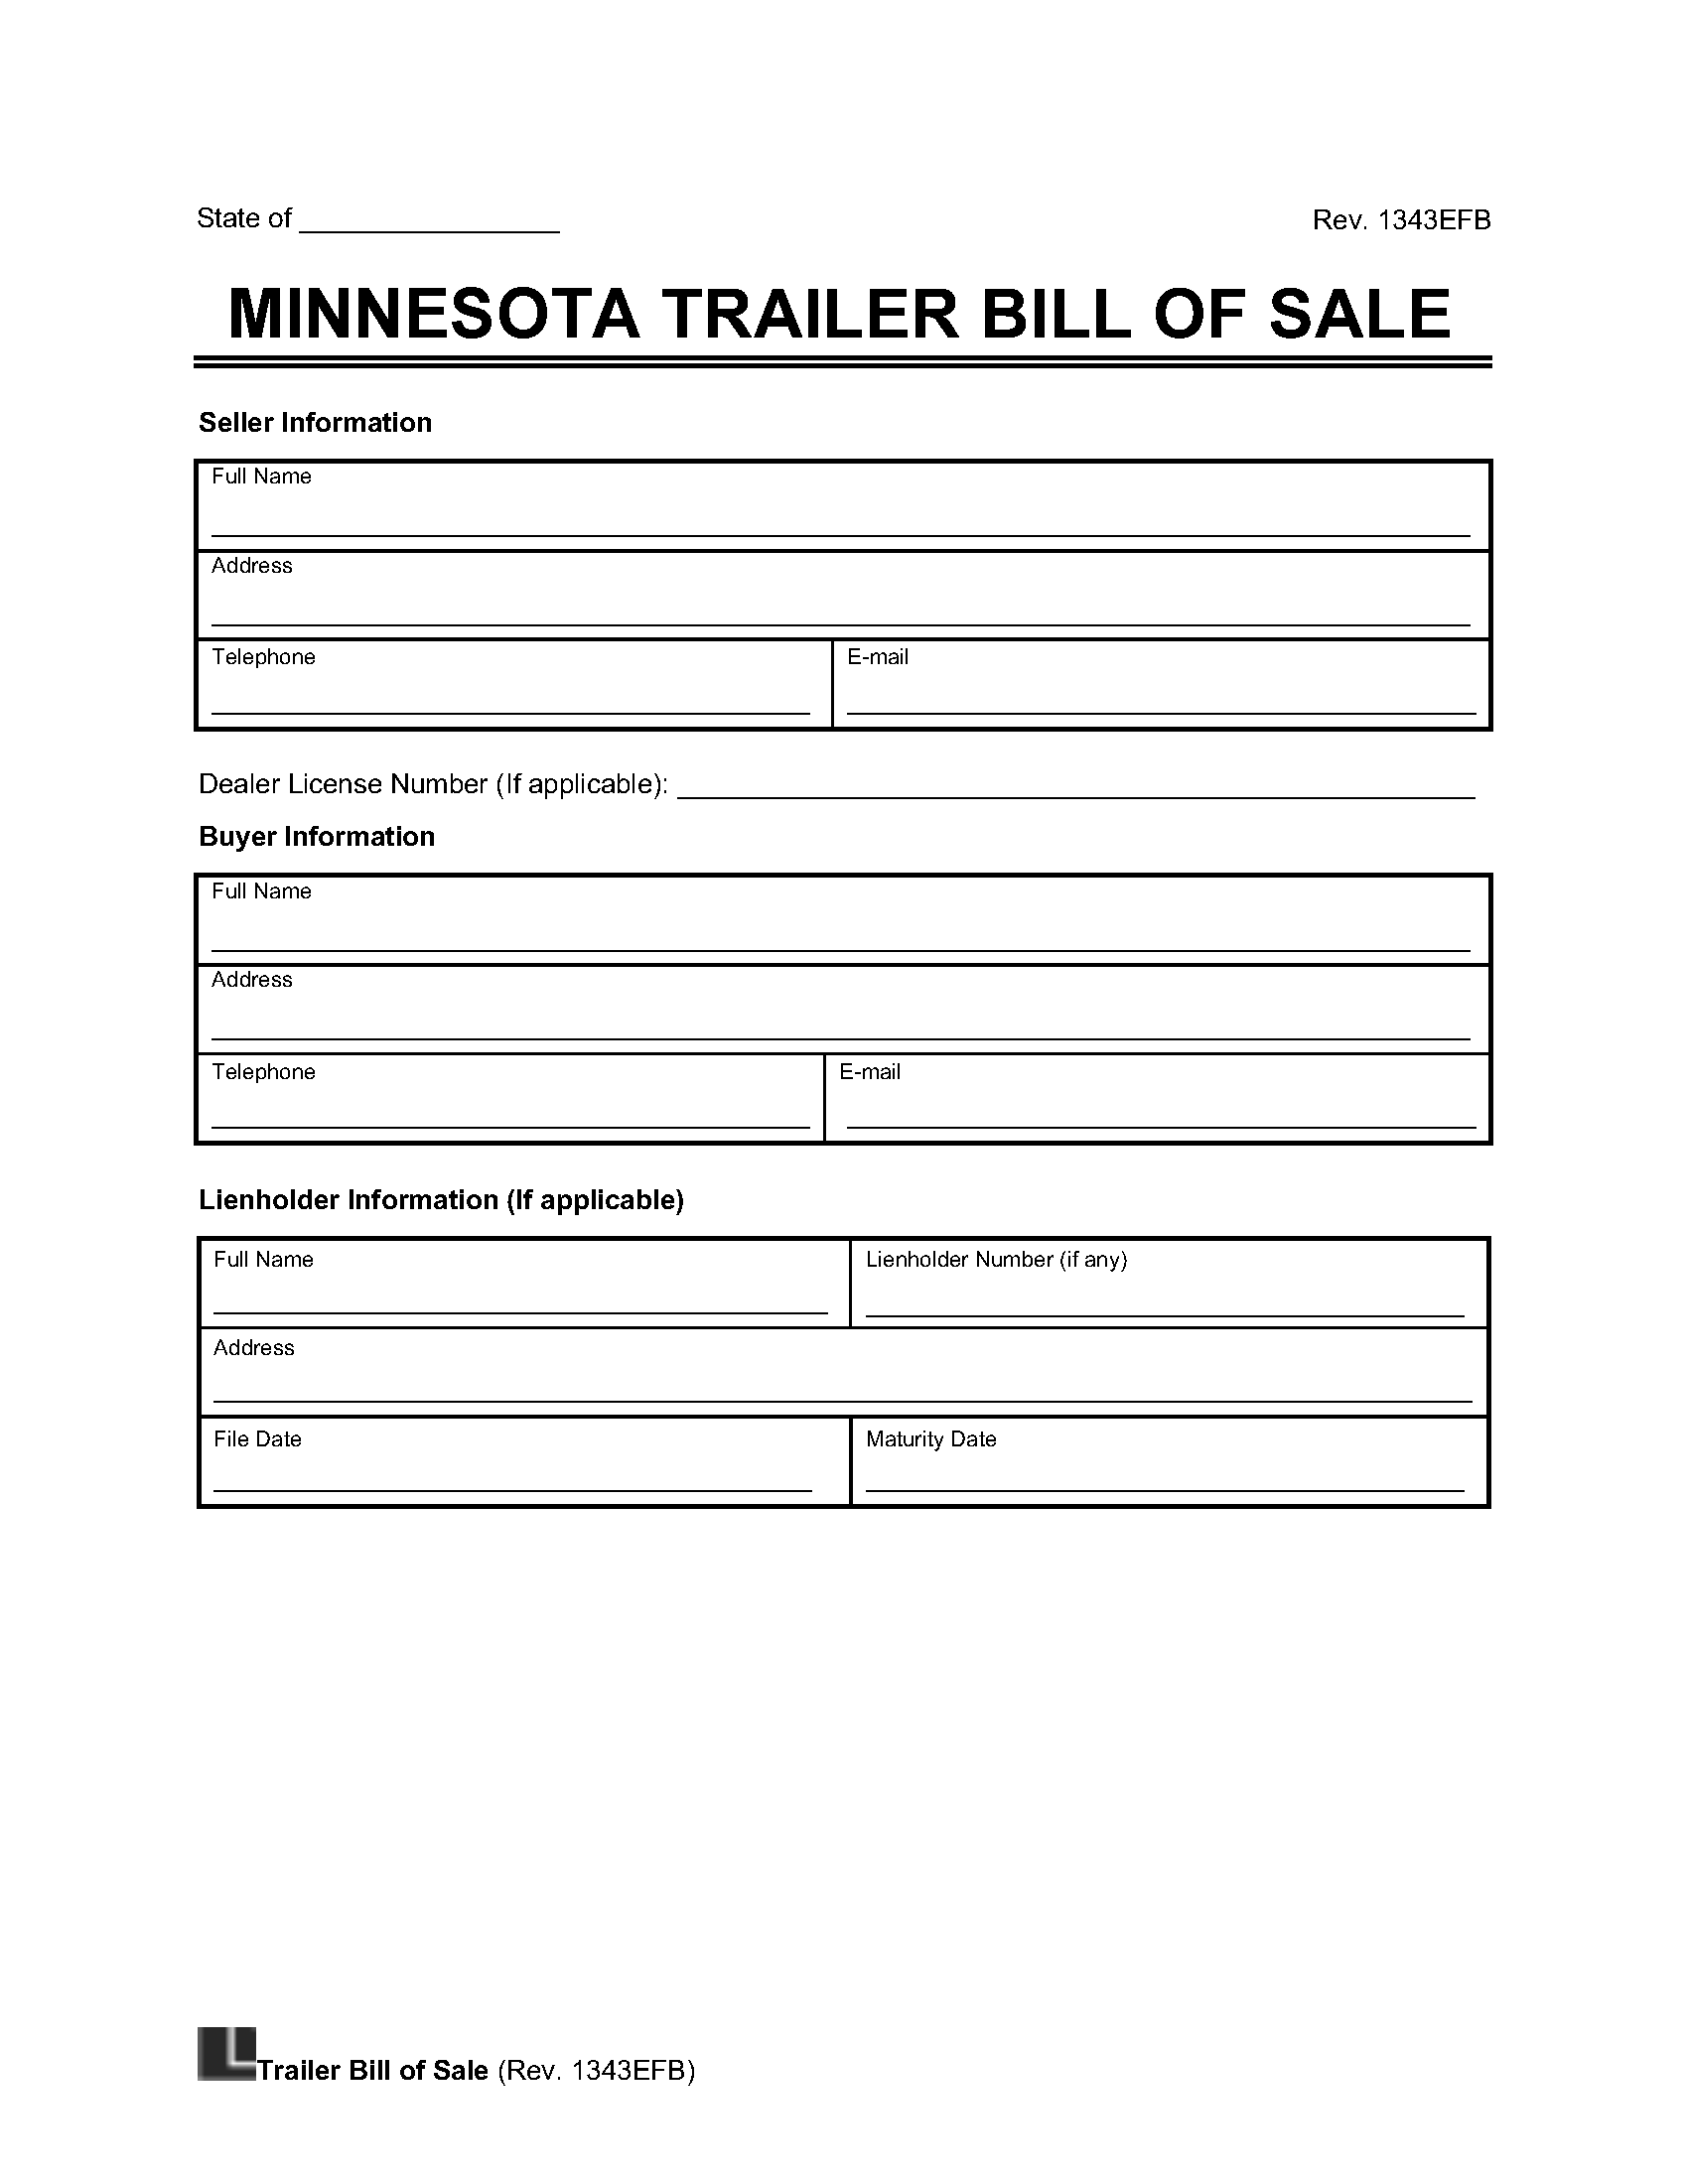 Minnesota Trailer Bill of Sale screenshot